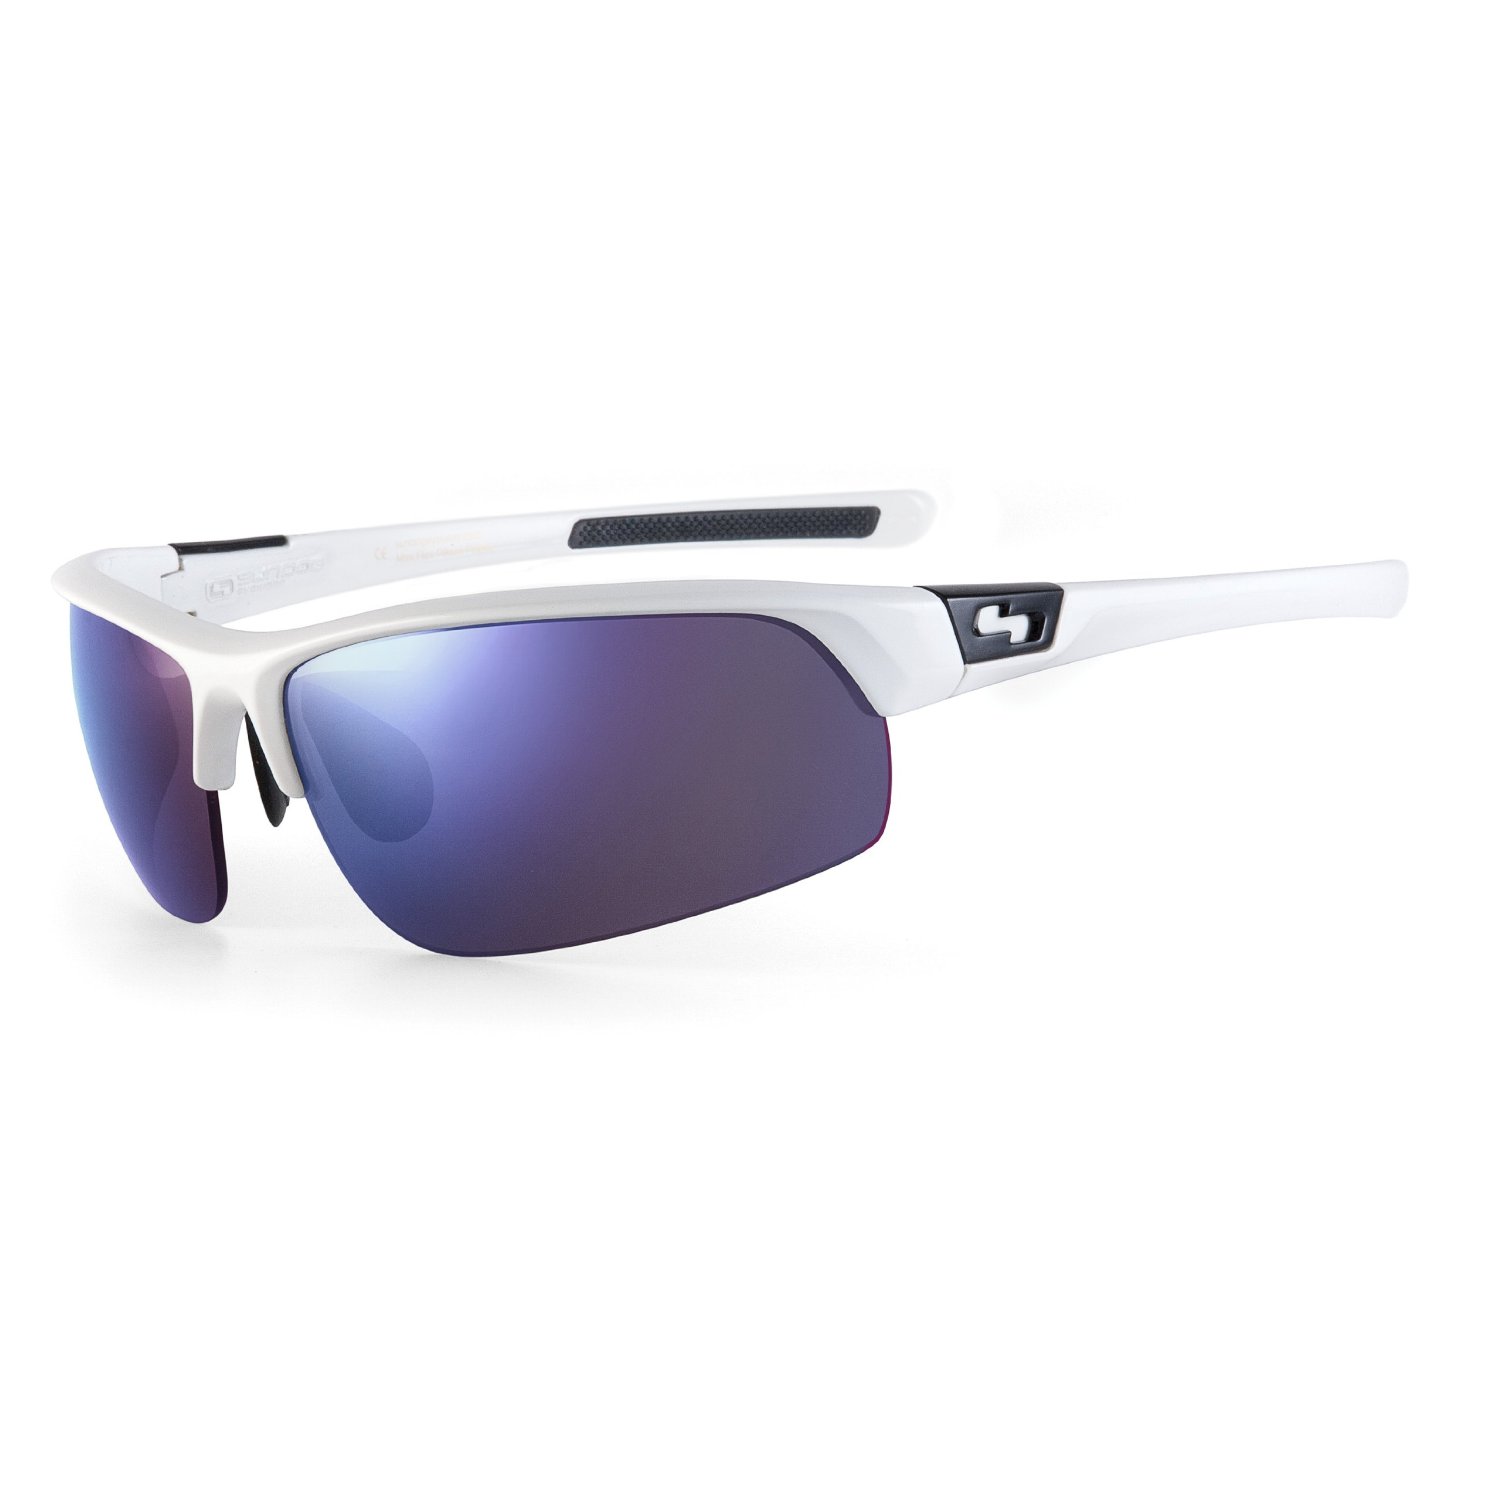 Sundog White Frames with Blue Lenses Mach Sunglasses